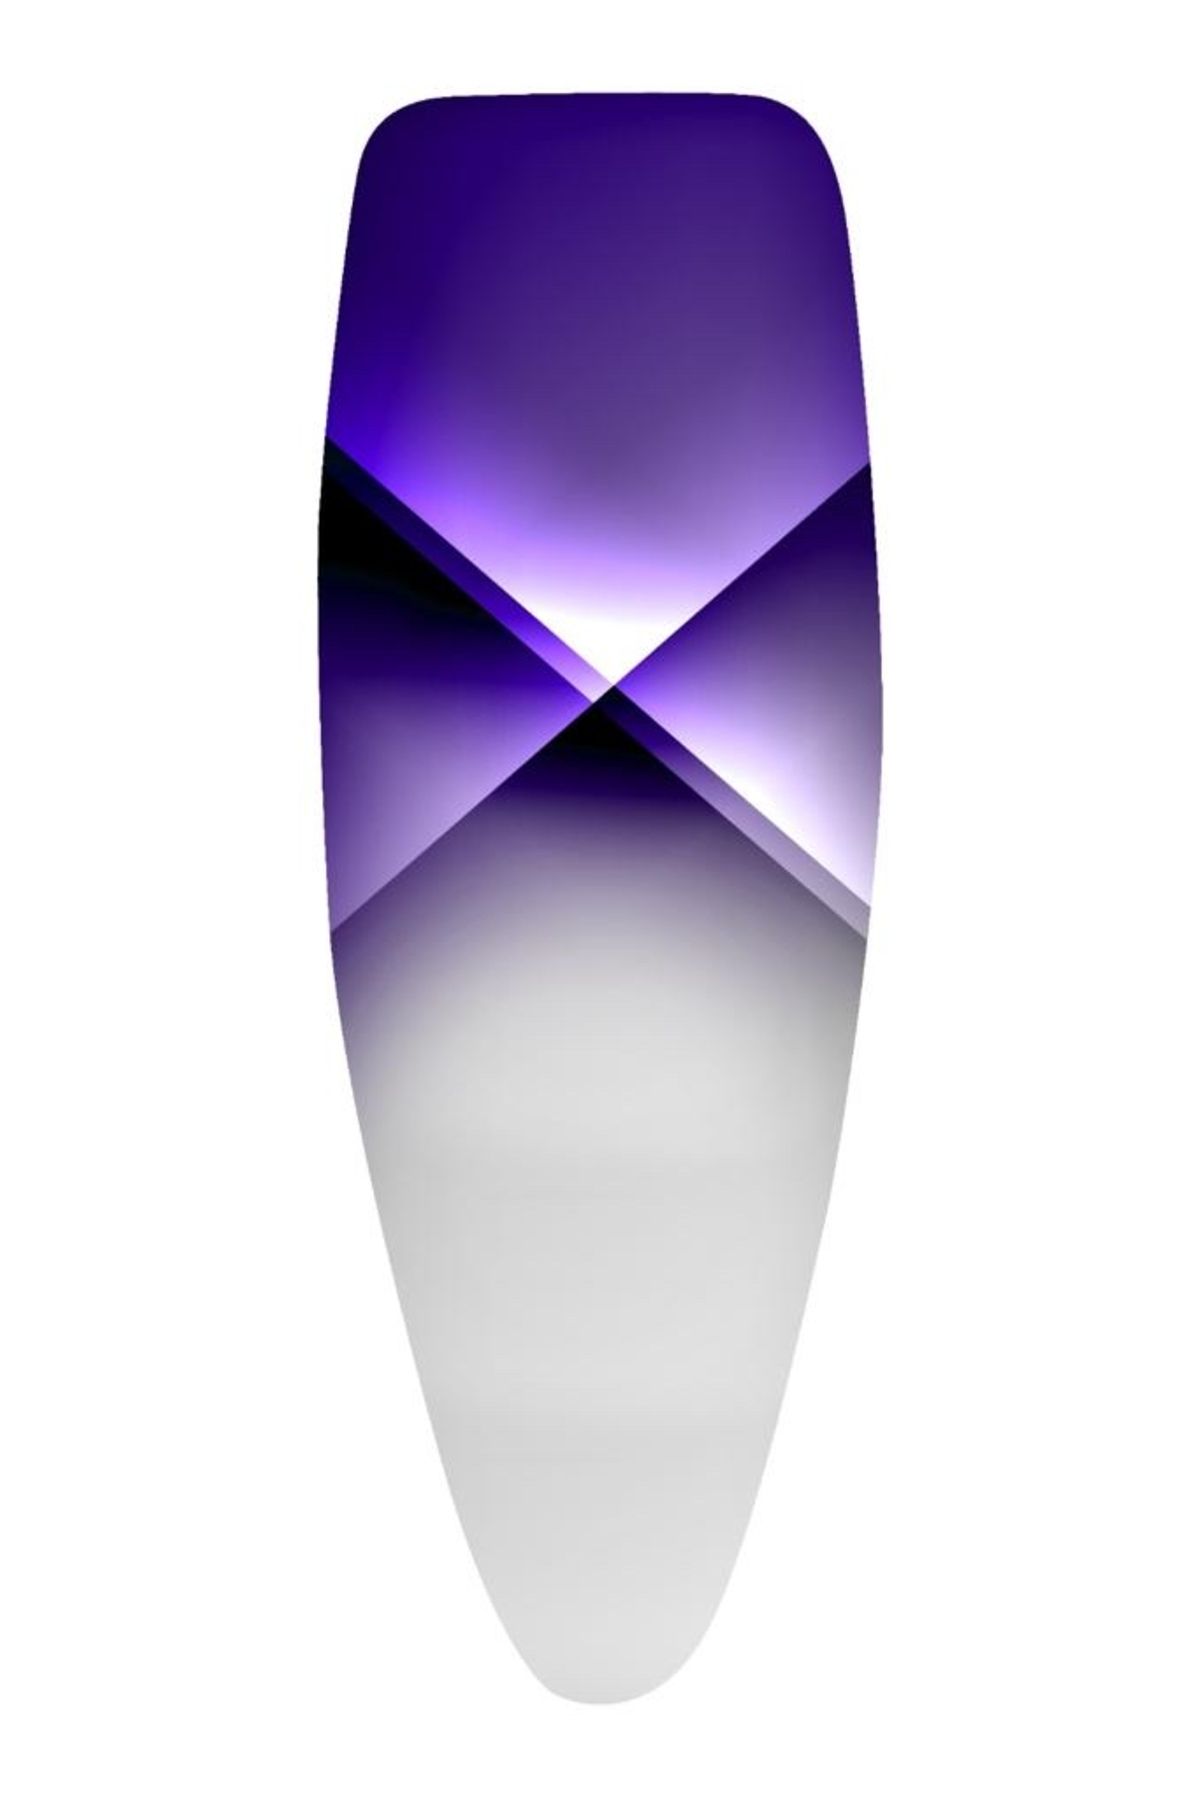 GERCELLA Prestige Purple Ütü Masası Kılıfı Bezi Örtüsü(50X135CM) (ÜTÜ MASASI &AKSESUARLARI, EV GEREÇLERİ)